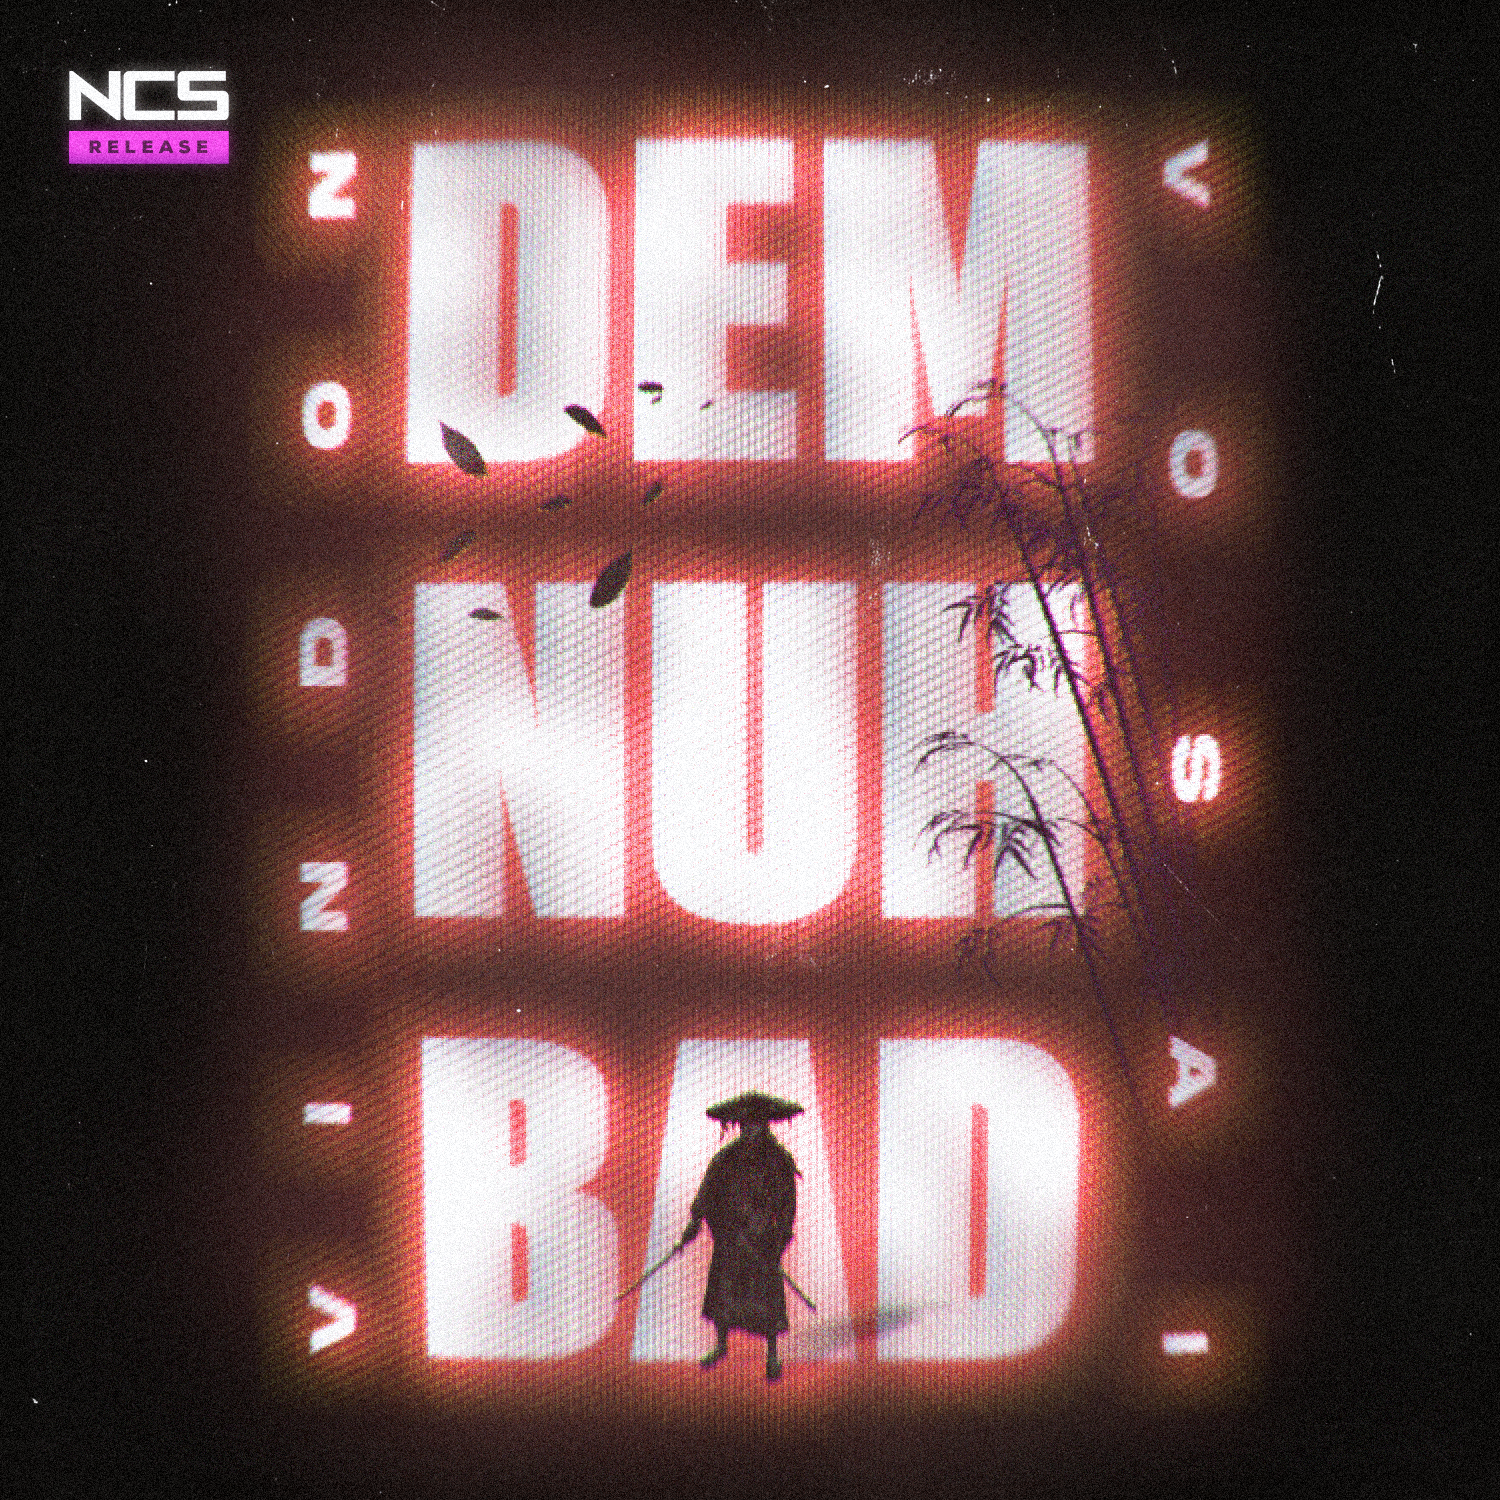 VinDon Rilis Video Musik Menegangkan Untuk Single Baru “Demnuhbad” melalui NCS